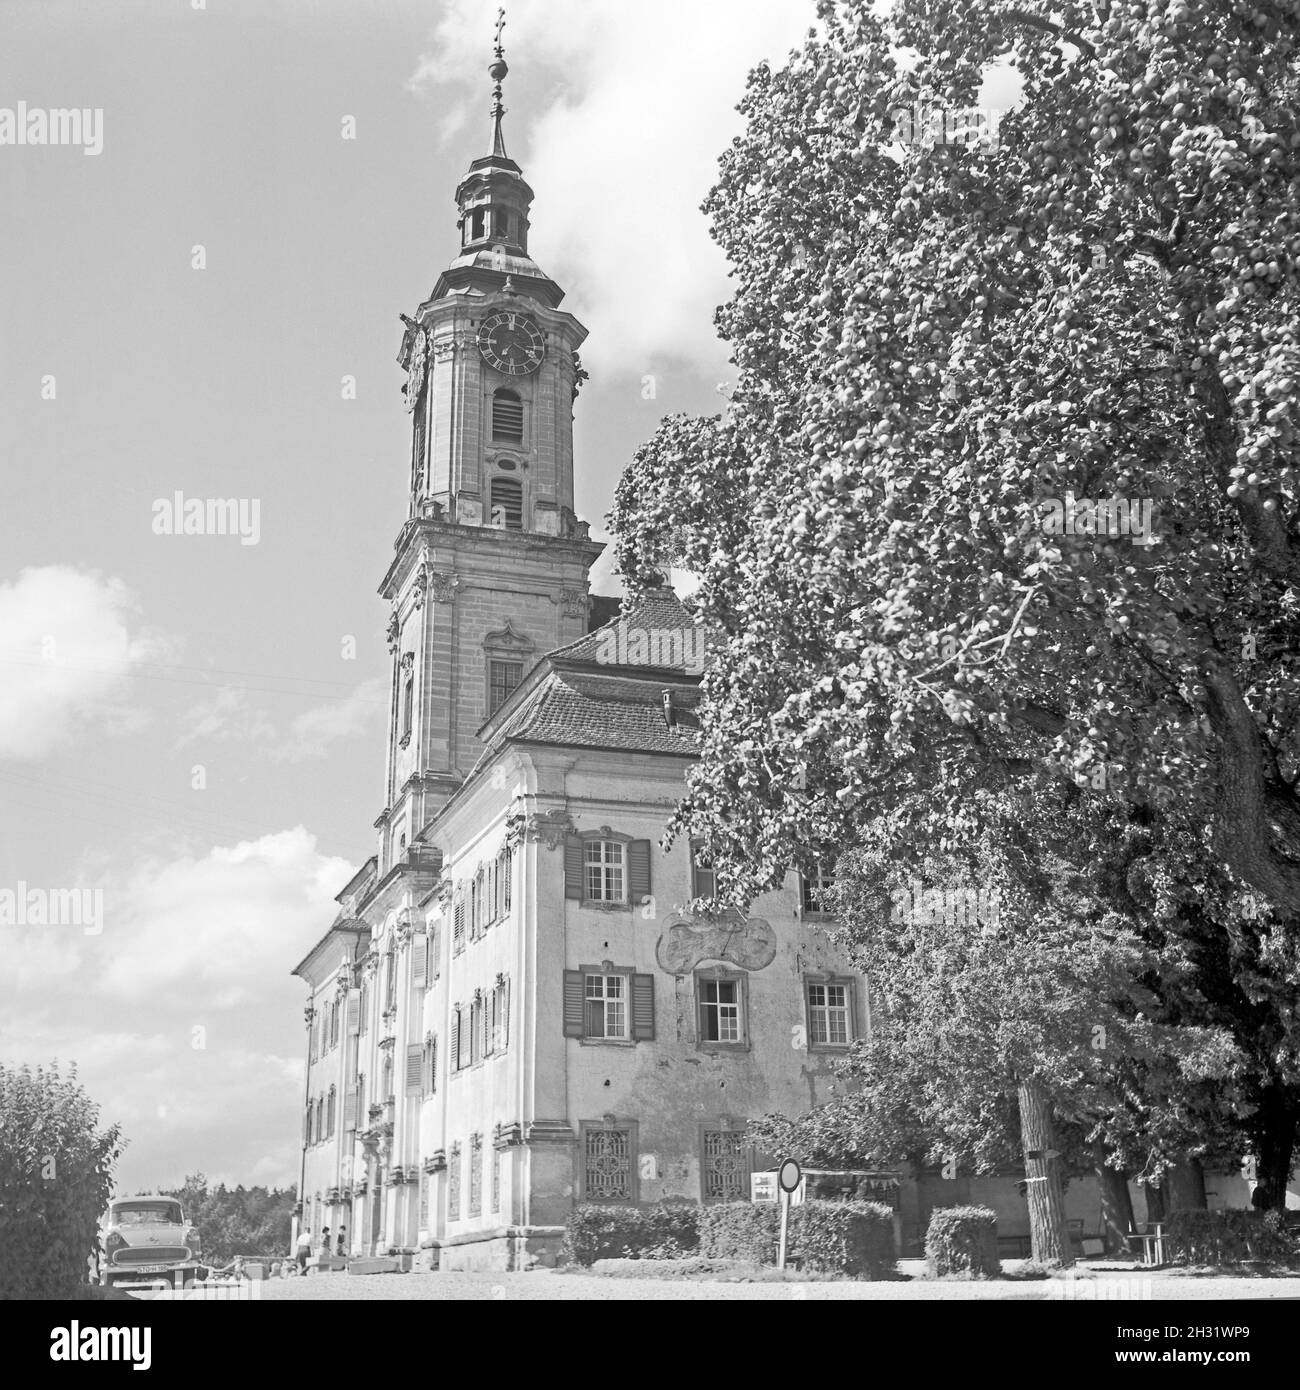 Wallfahrtskirche a Birnau, Germania 1959. Chiesa di pellegrinaggio a Birnau, Germania 1959. Foto Stock